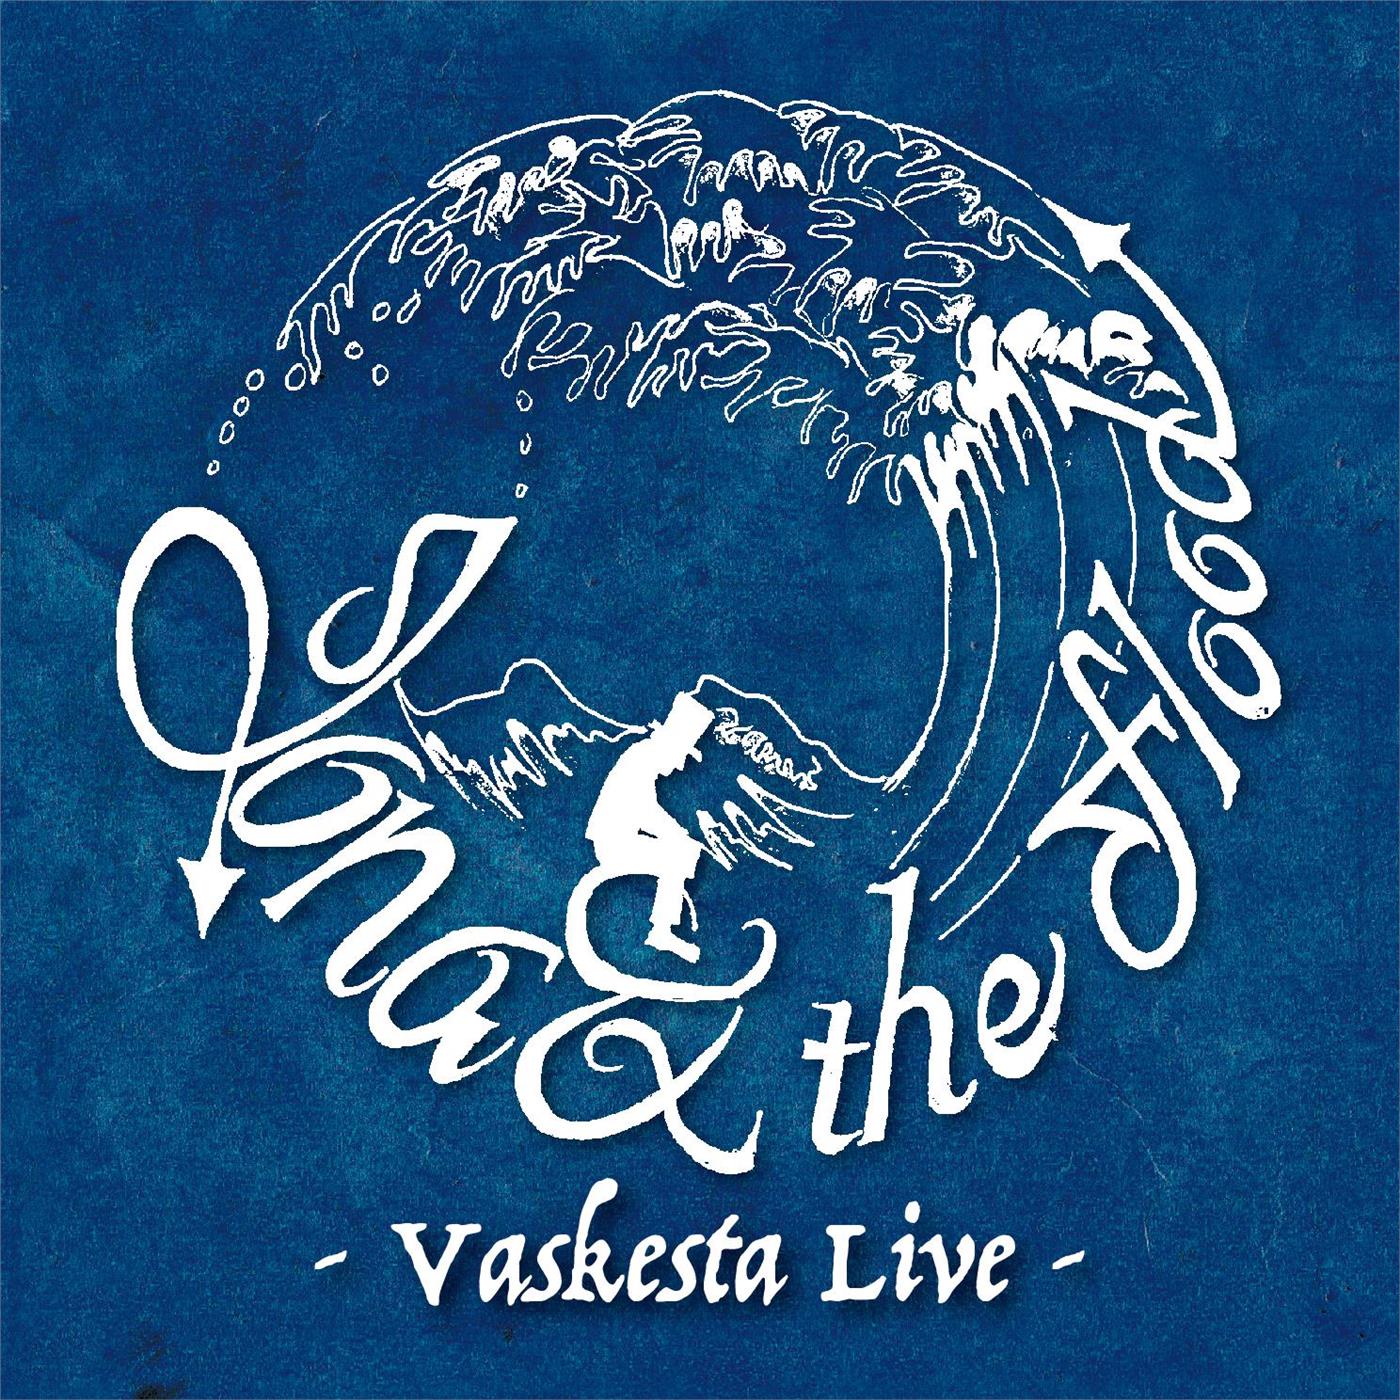 Vaskesta Live